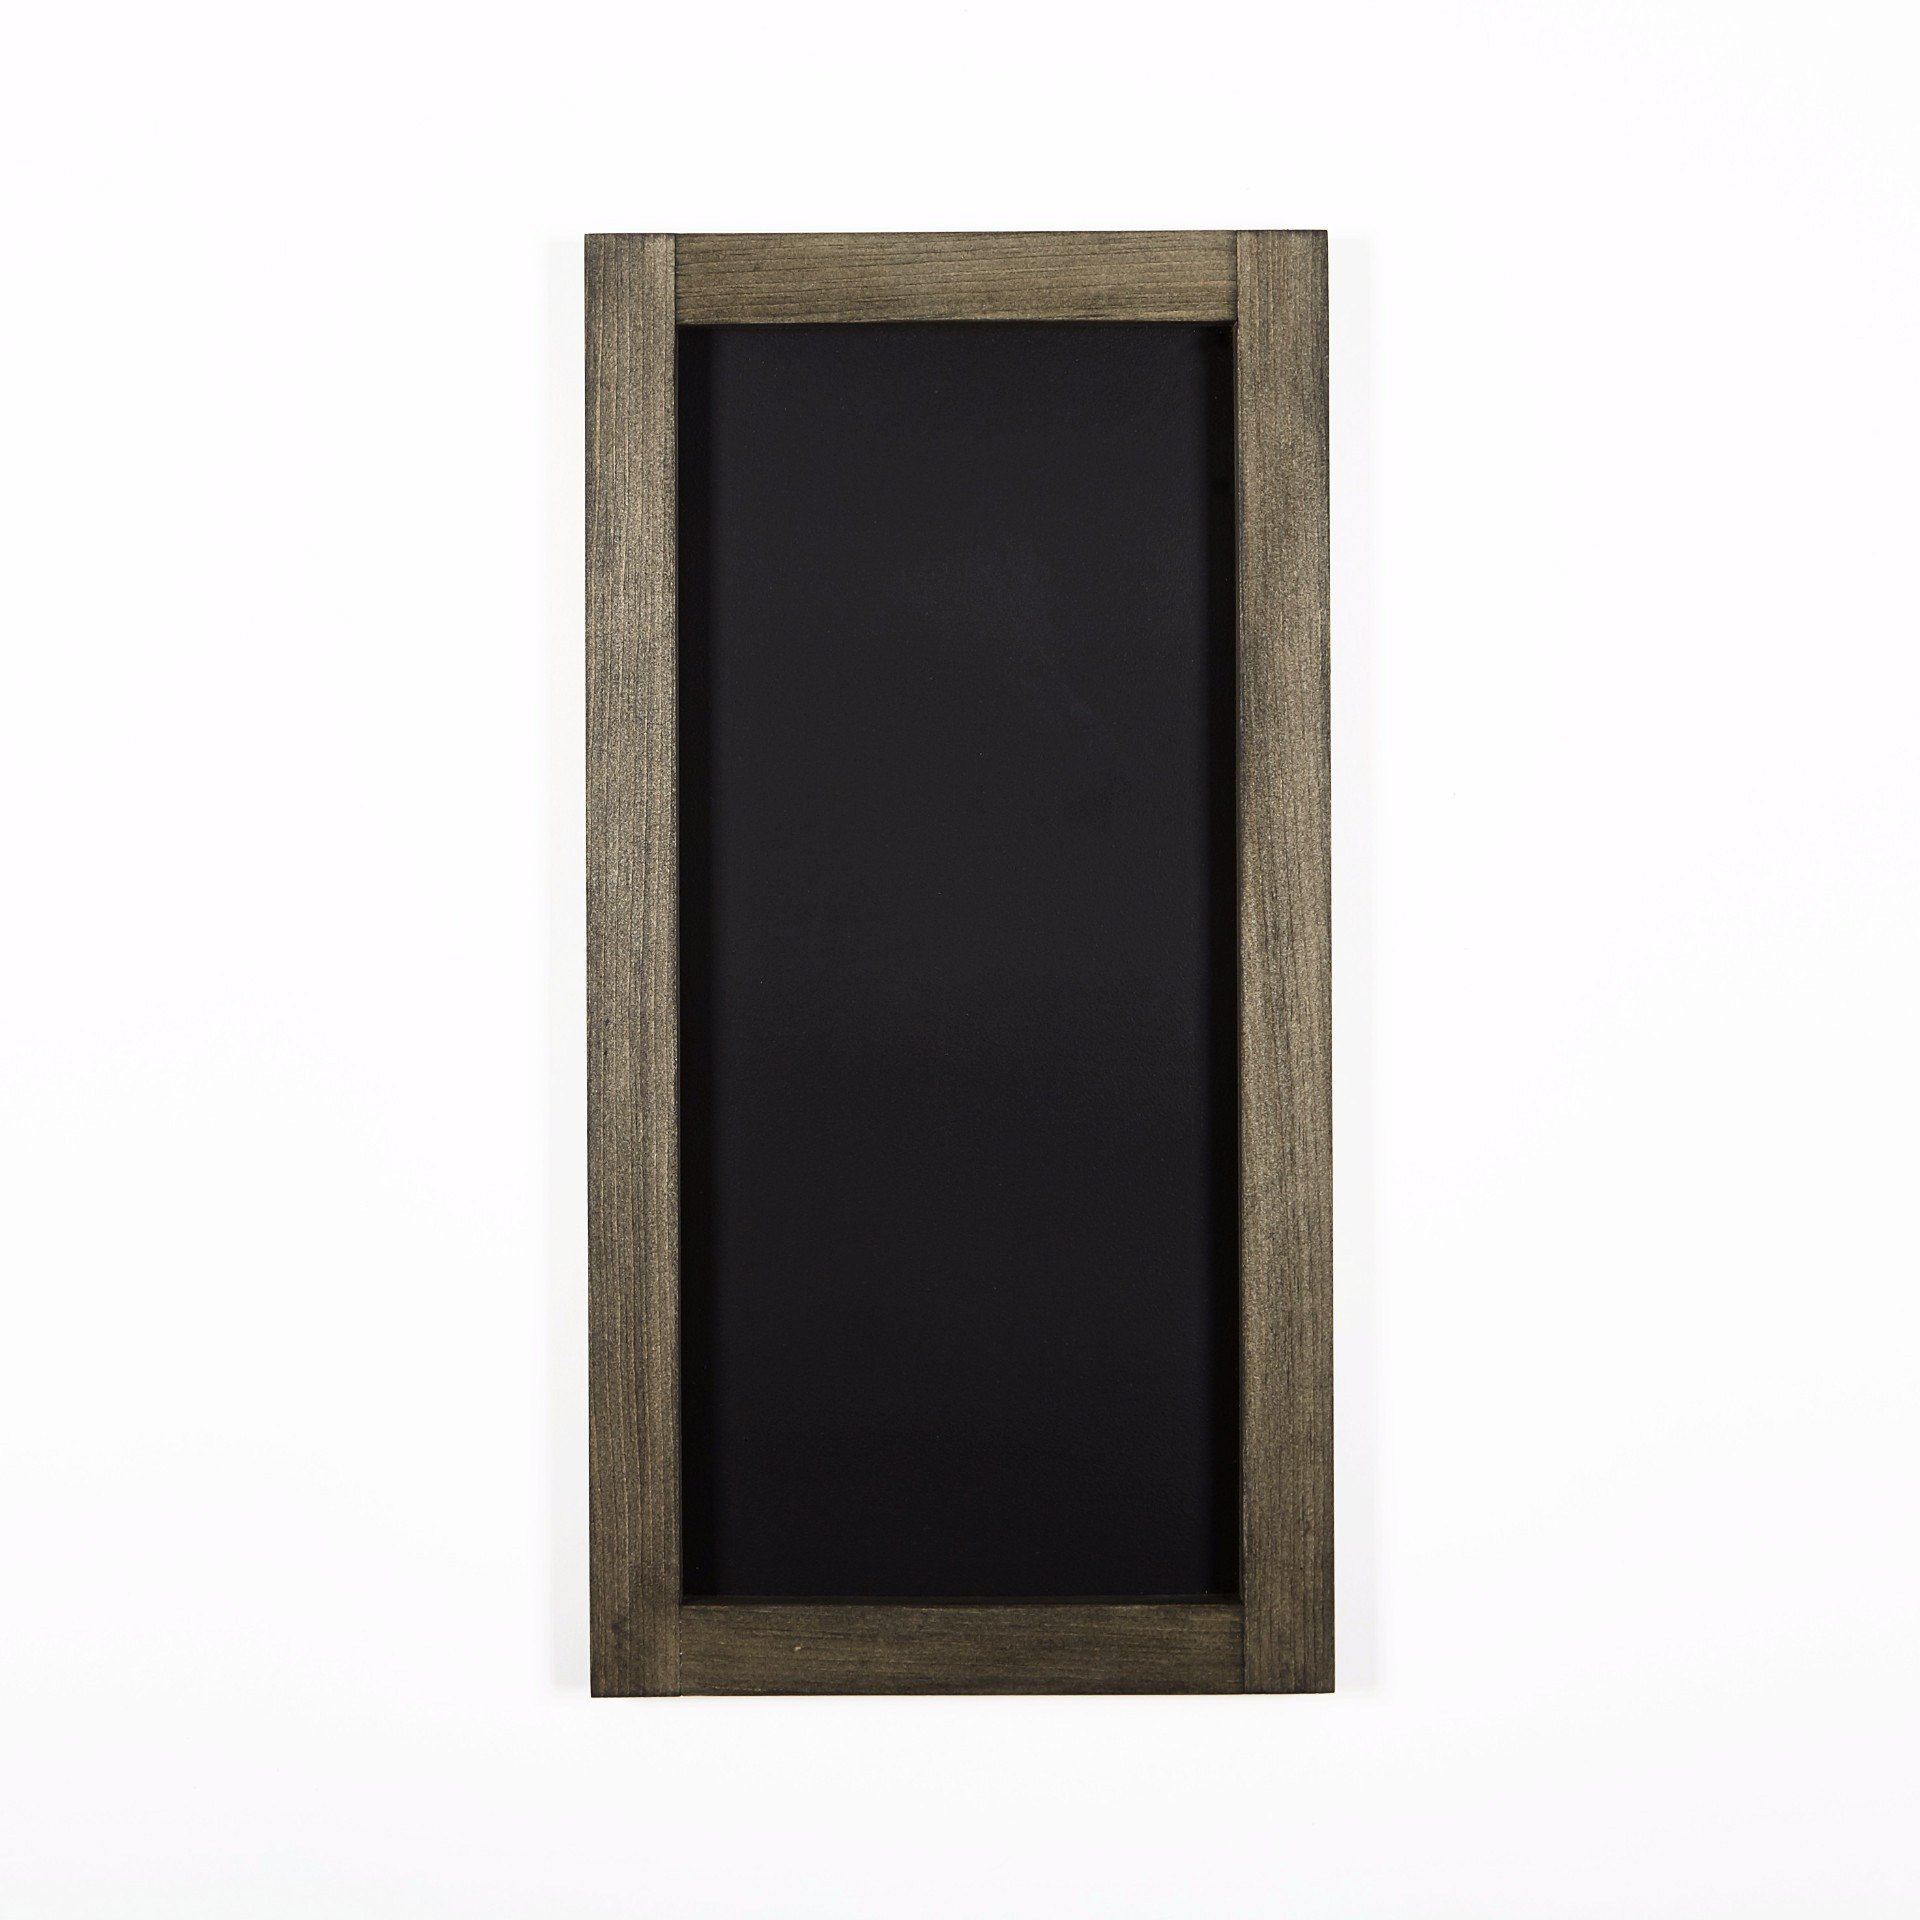 Rectangular Chalkboard with Ebony Stained Pine Frame: 12